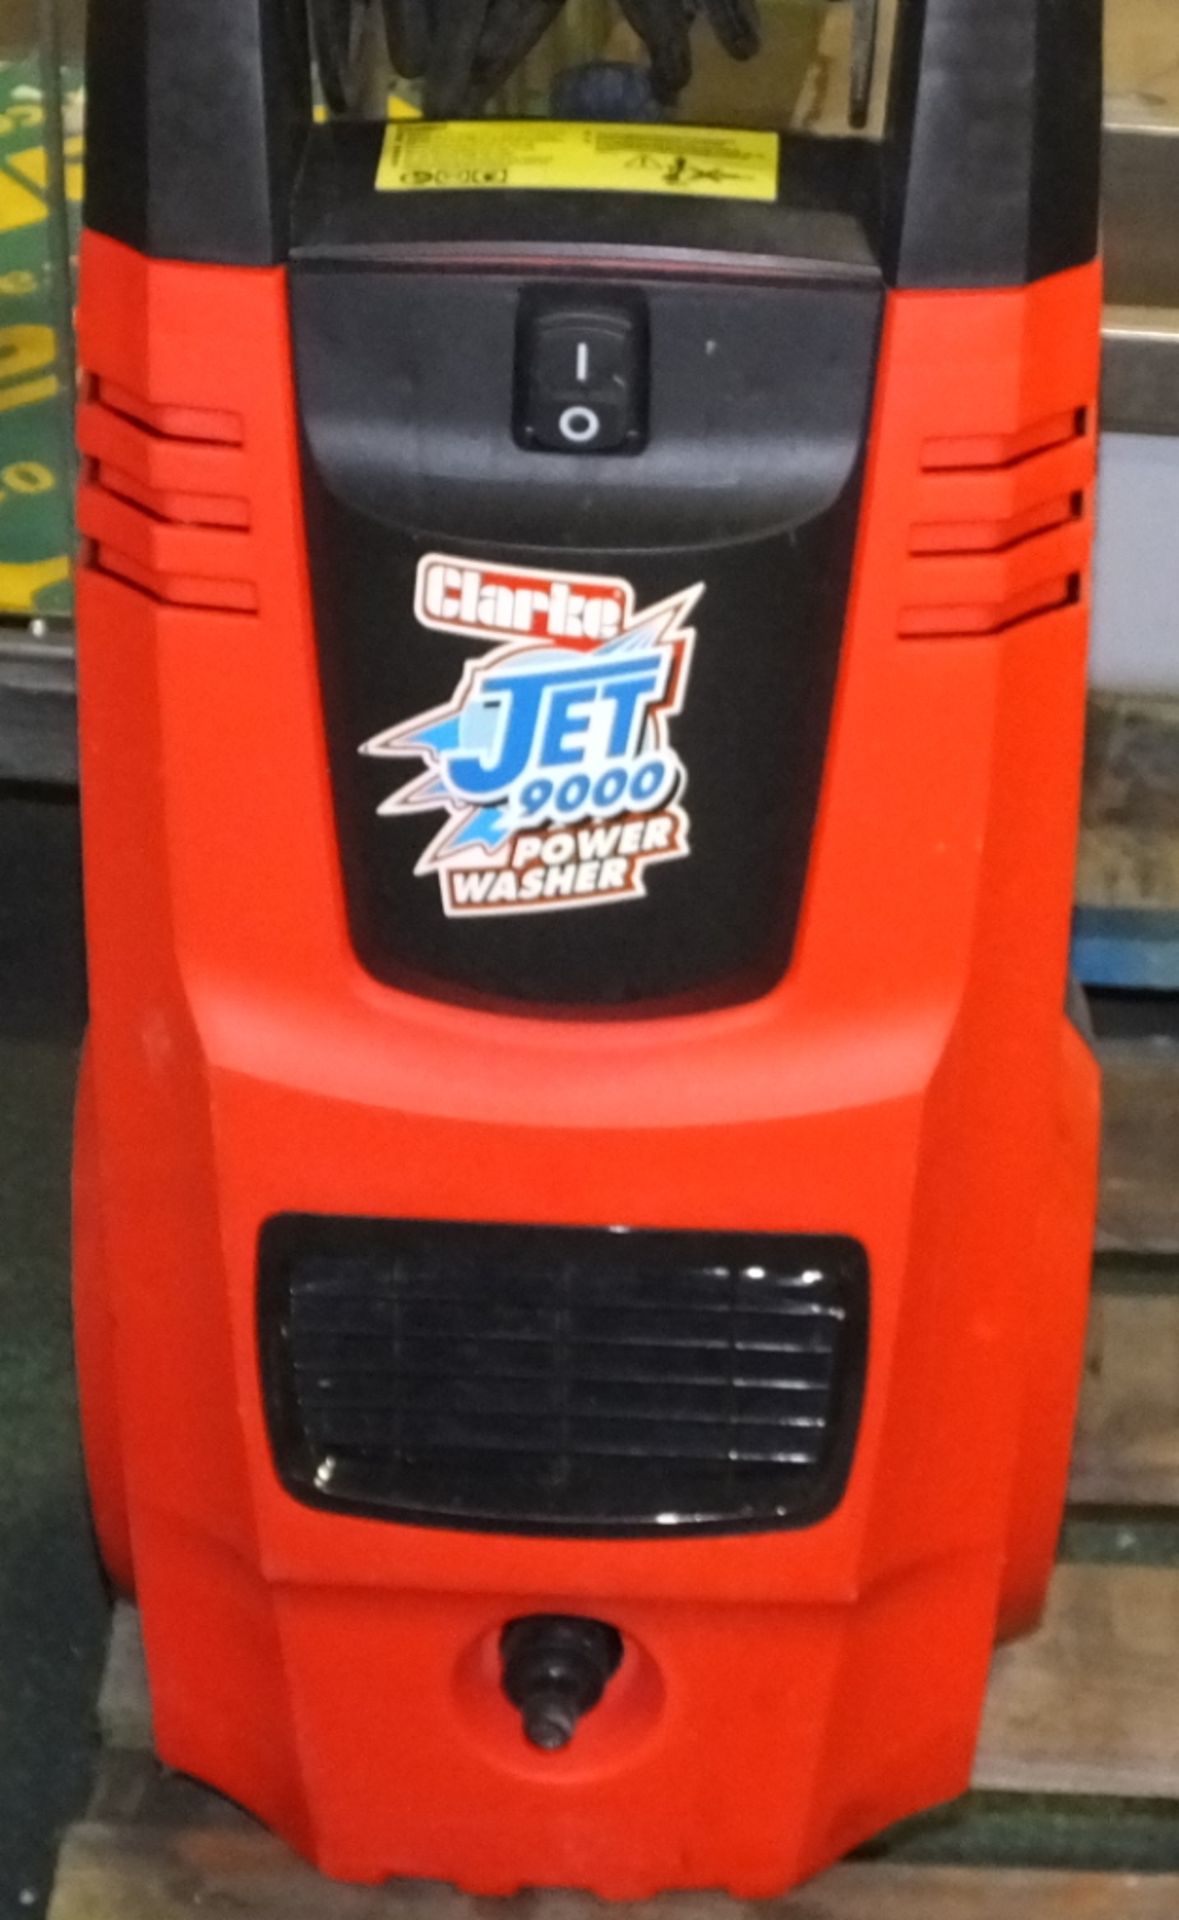 Clarke Jet 9000 Power Washer - Image 2 of 3